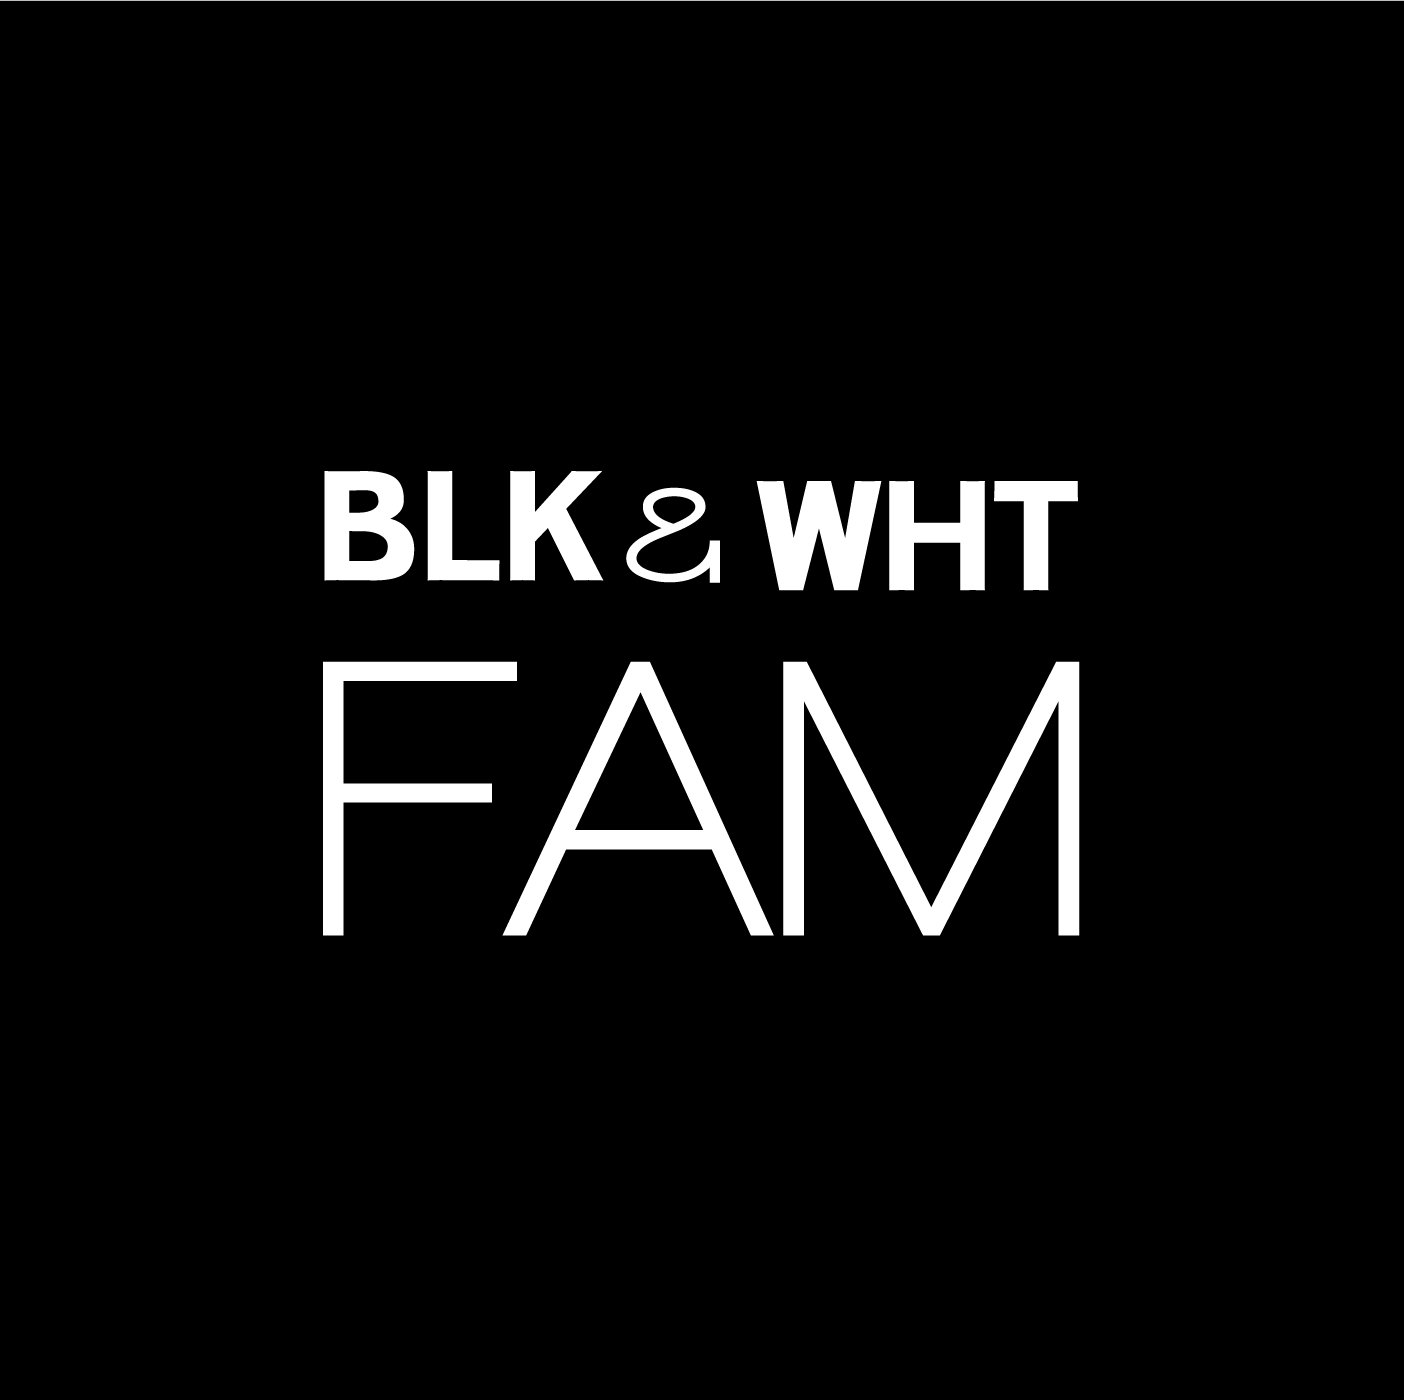 Follow us on Instagram! @blkwhtfam